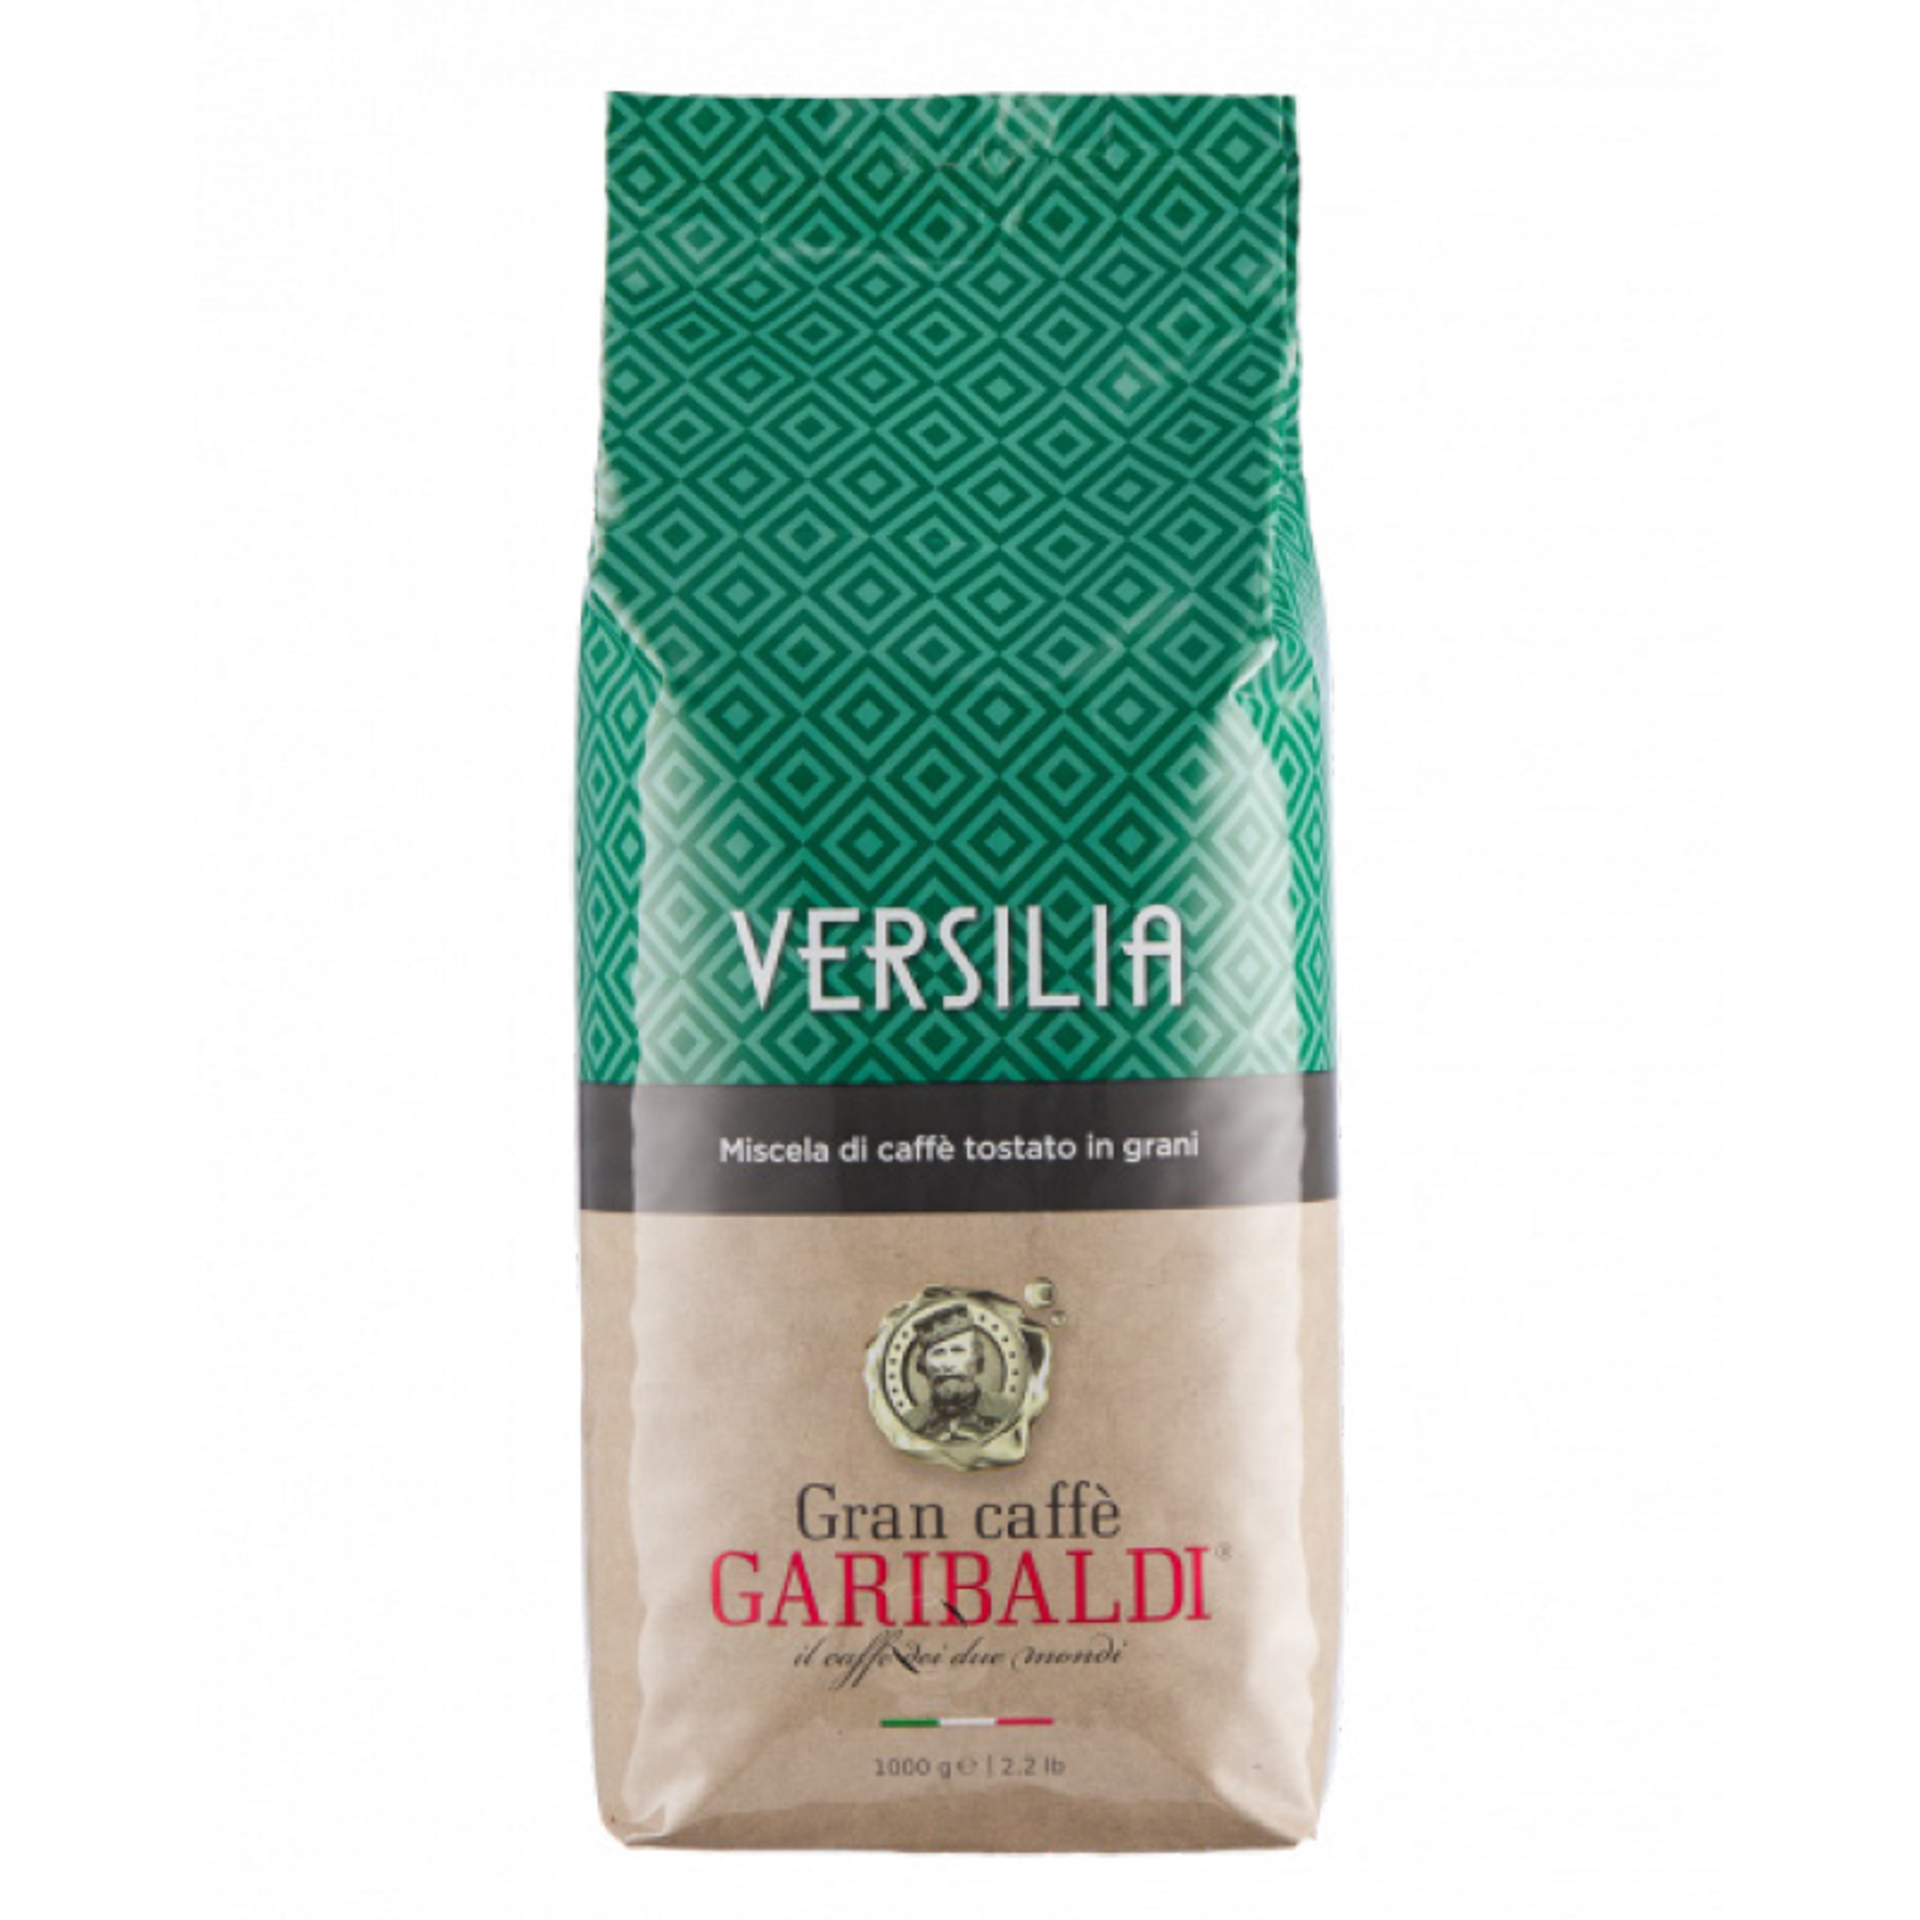 Garibaldi Versilia coffee beans blend 1000 g